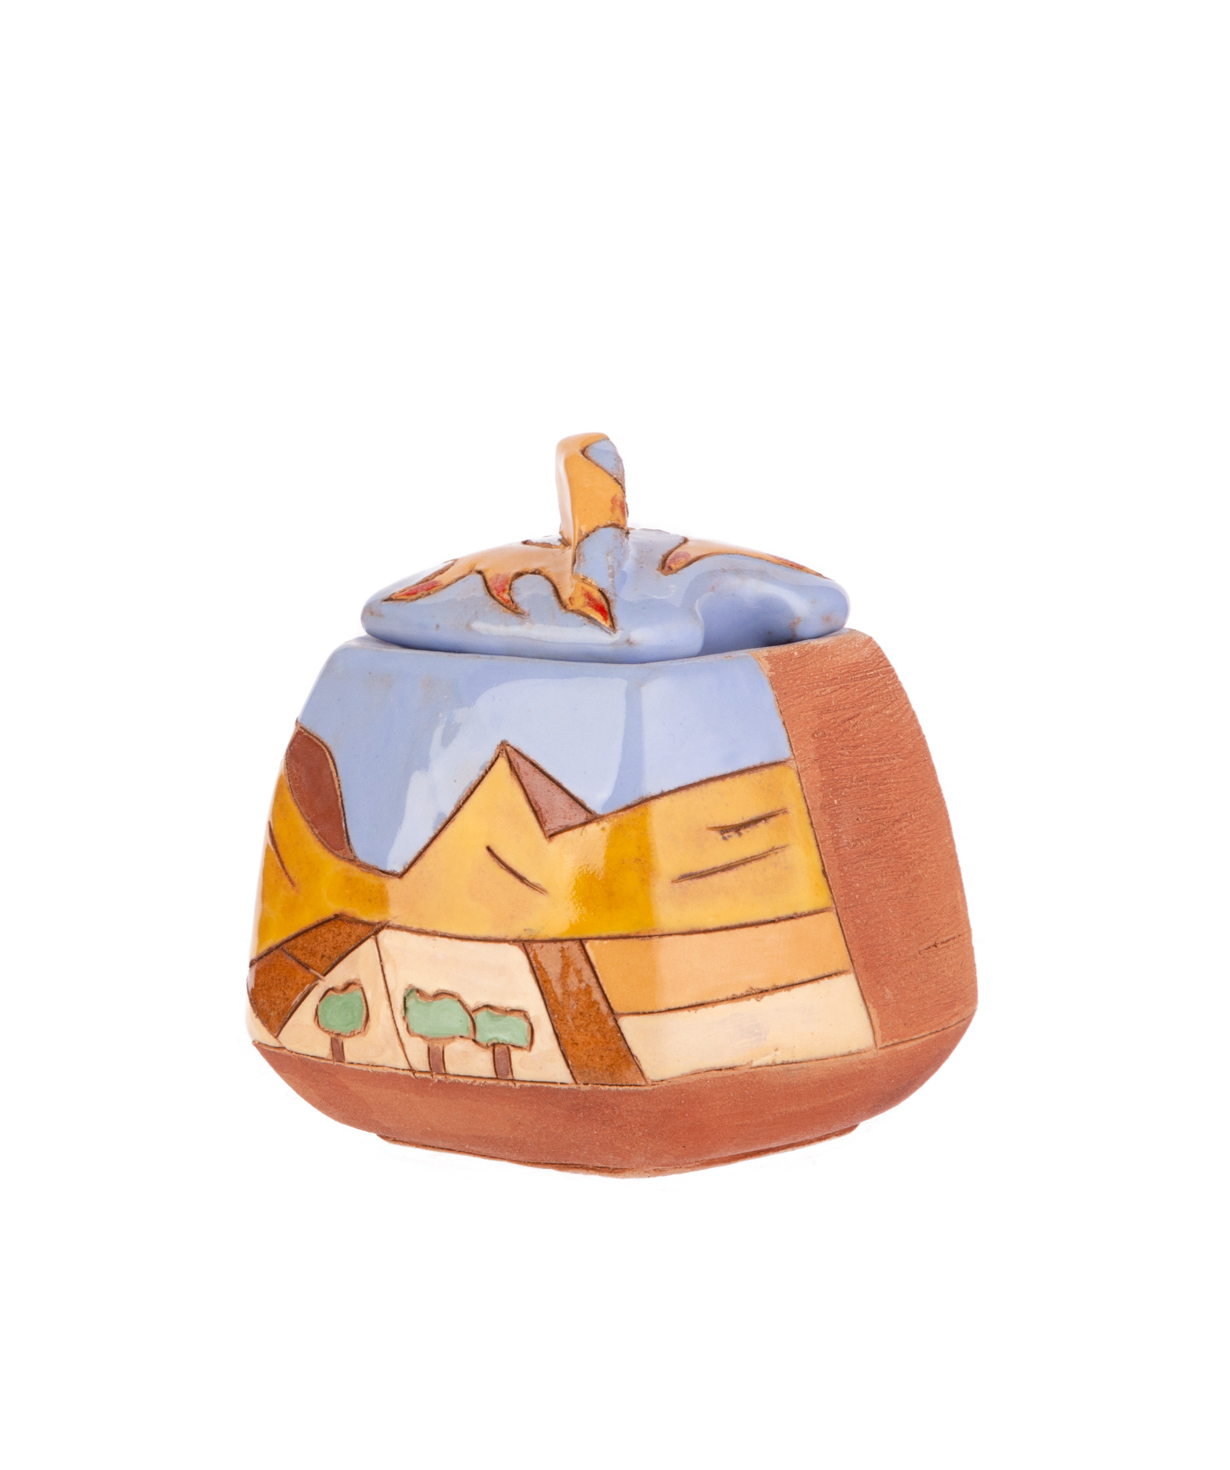 Sugar bowl `Nuard Ceramics` Saryan